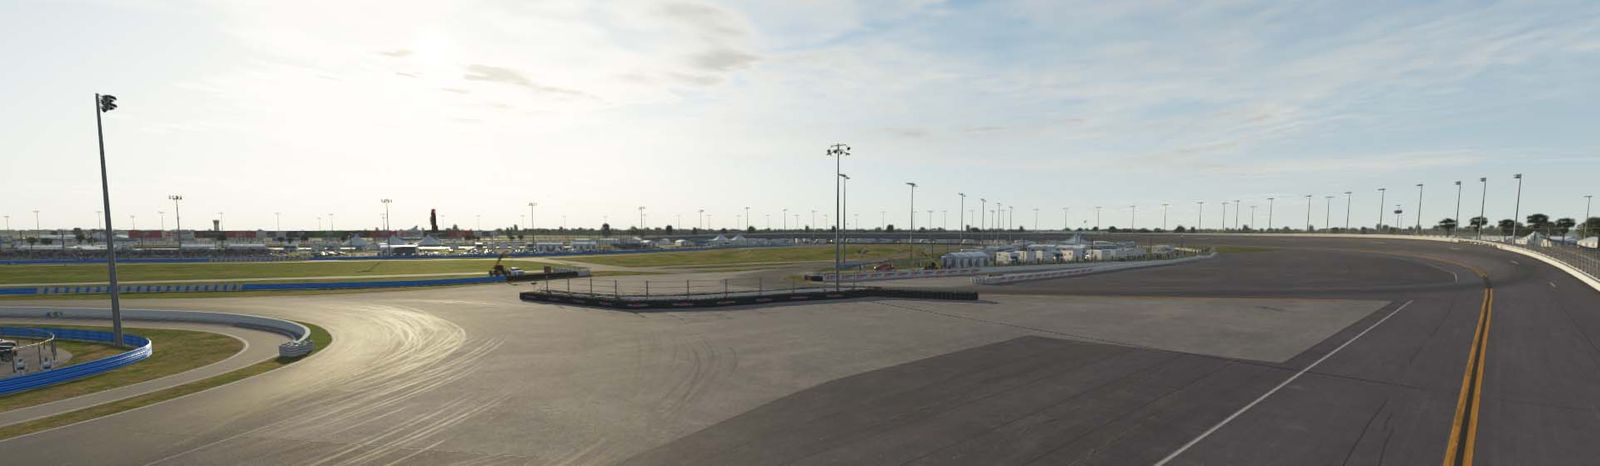 Daytona International Speedway in rFactor 2.